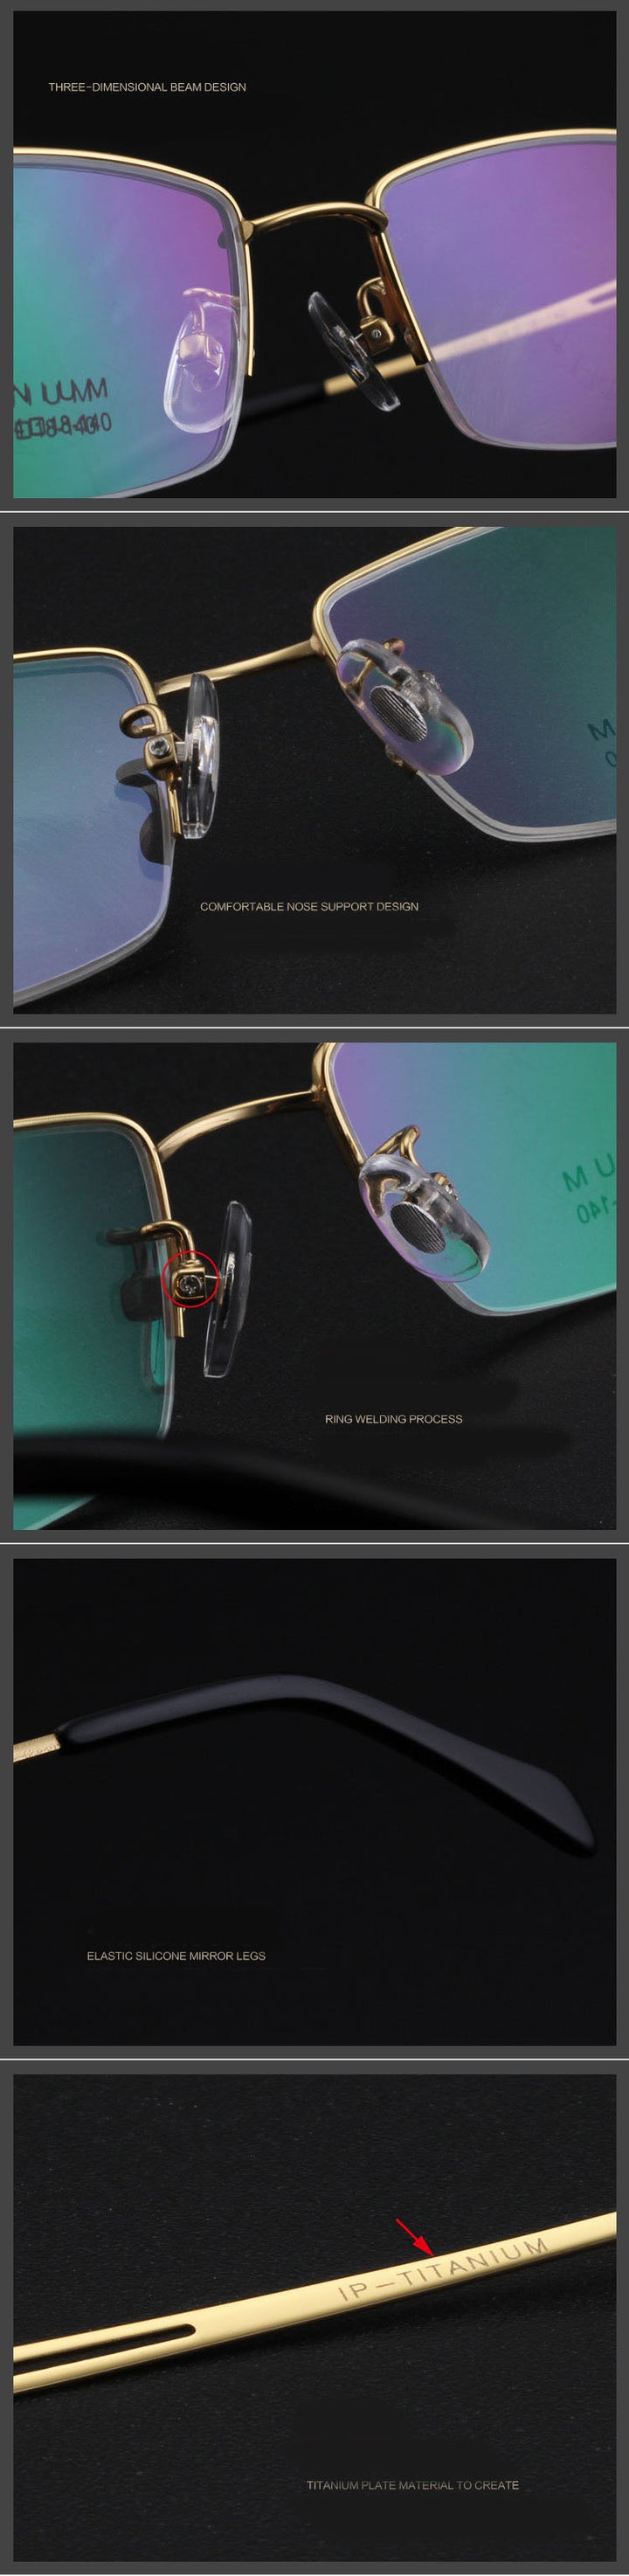 Men's Titanium Frame Half Rim Eyeglasses Lr8906 Semi Rim Bclear   